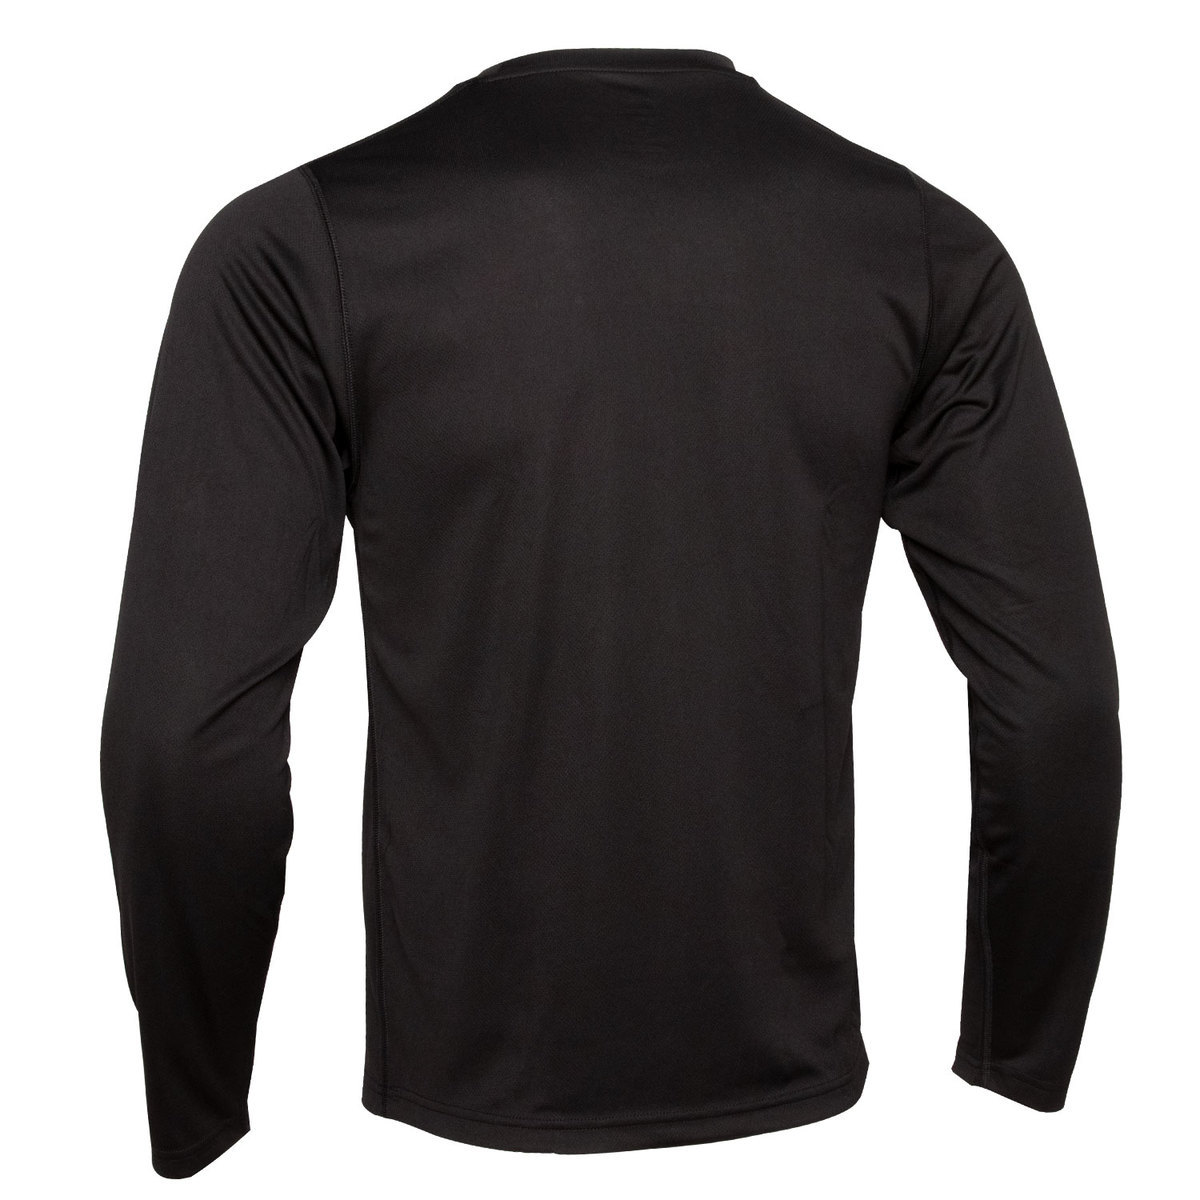 Heat Holders Men's Warm Thermal Long Sleeve Shirt - Black - XXL - Black ...